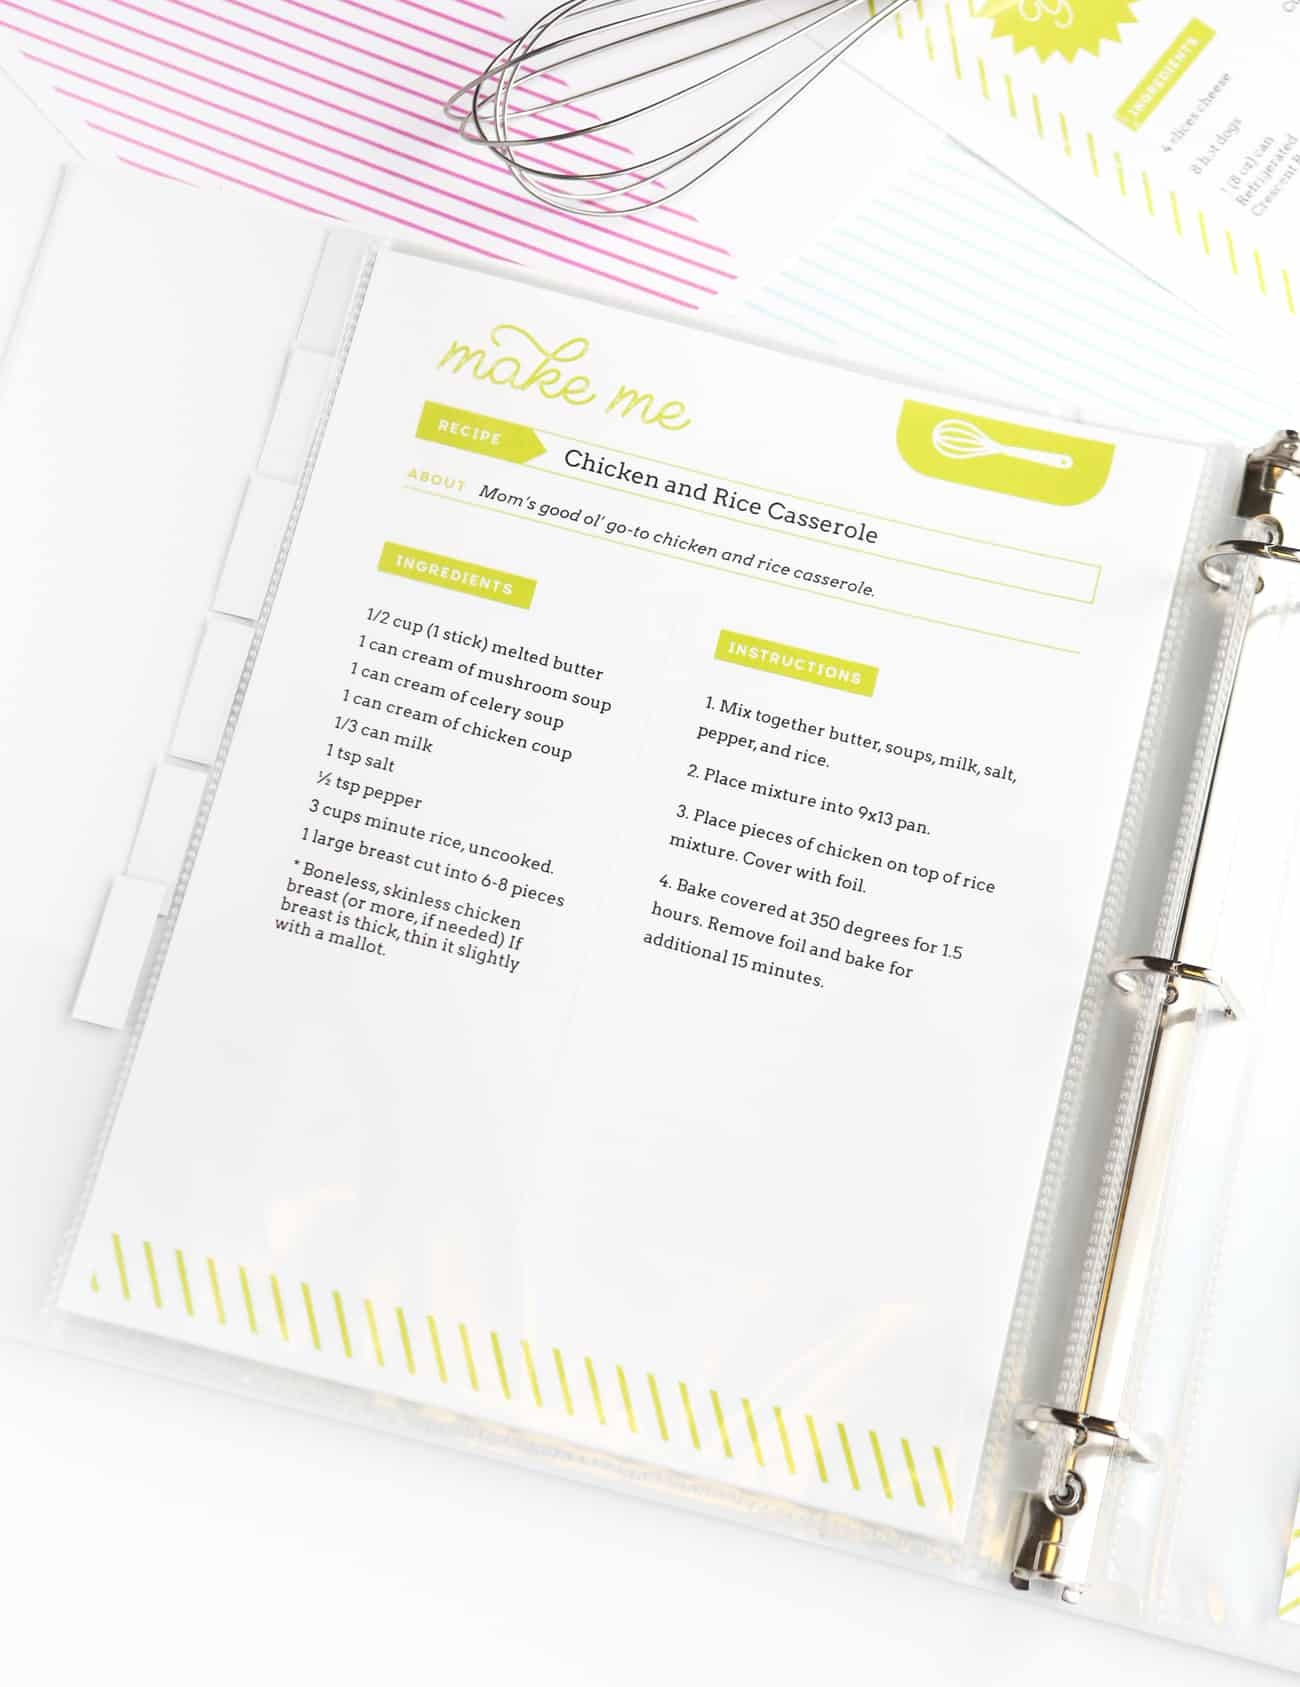 Diy Recipe Book (With Free Printable Recipe Binder Kit!) - Free Printable Recipe Page Template